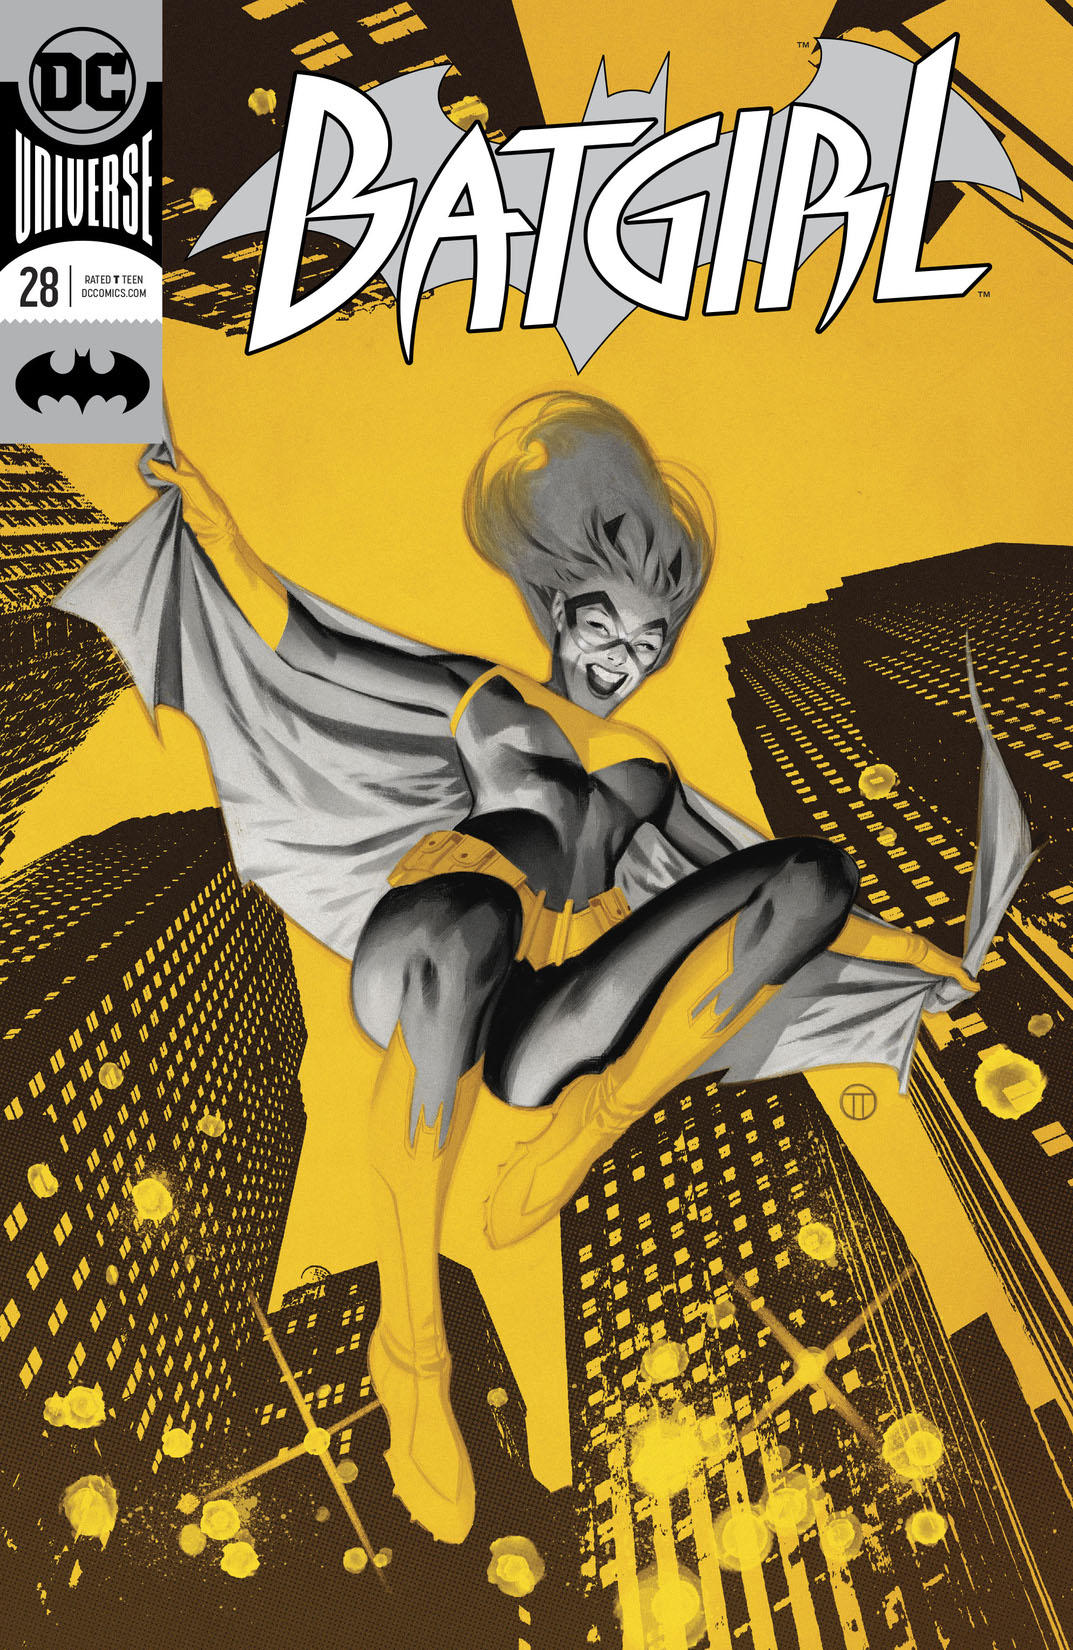 Batgirl (2016-) #28 preview images